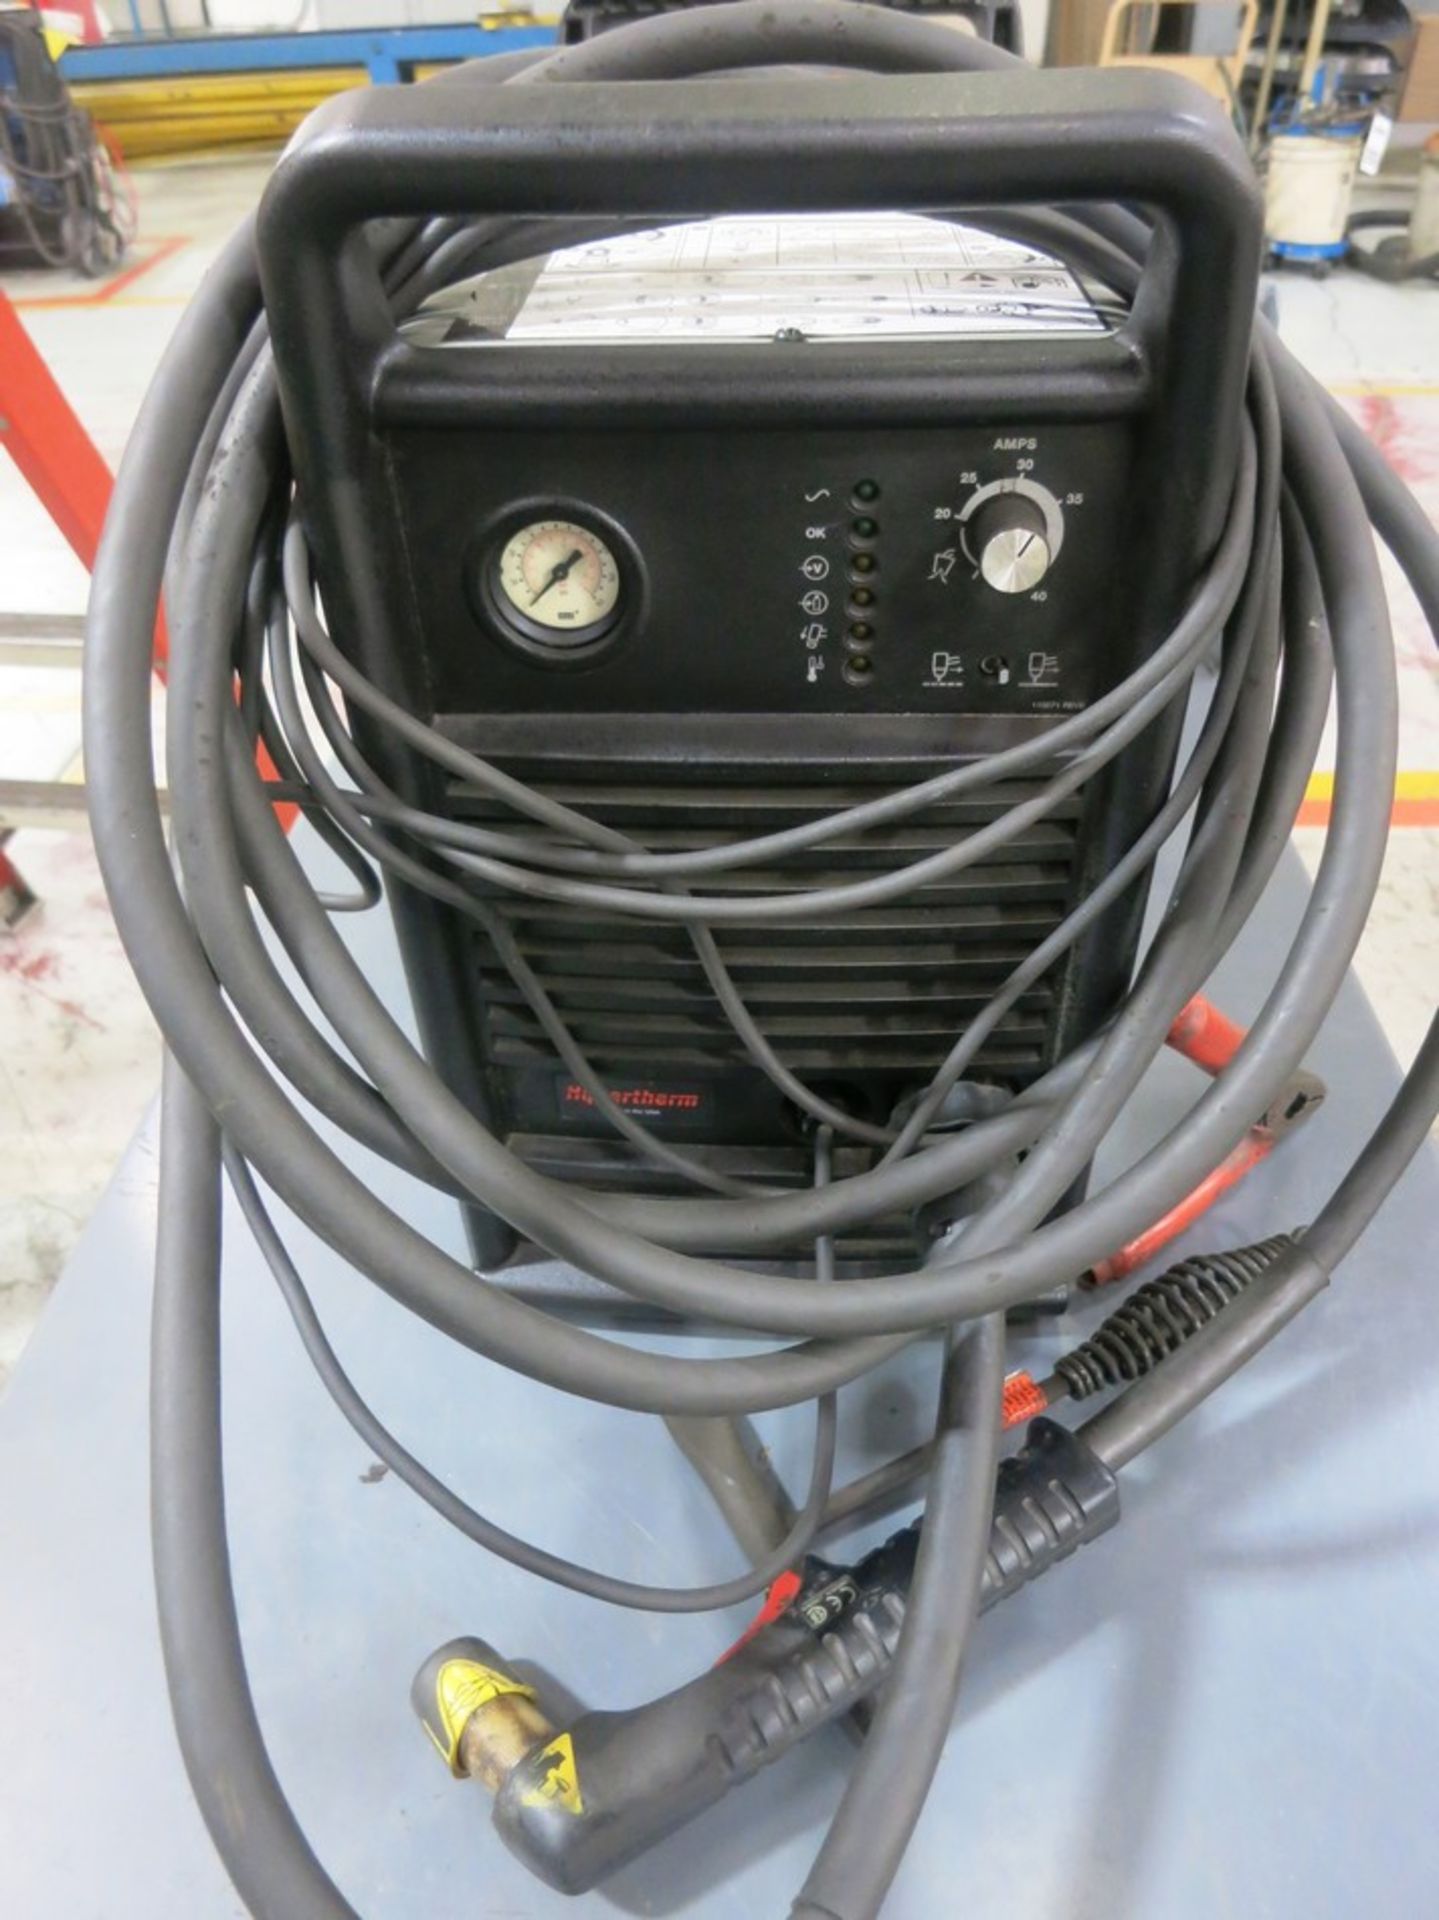 Hypertherm Powermax 600 Plasma Cutting Torch S/N: Pmx600-011576 - Image 2 of 3